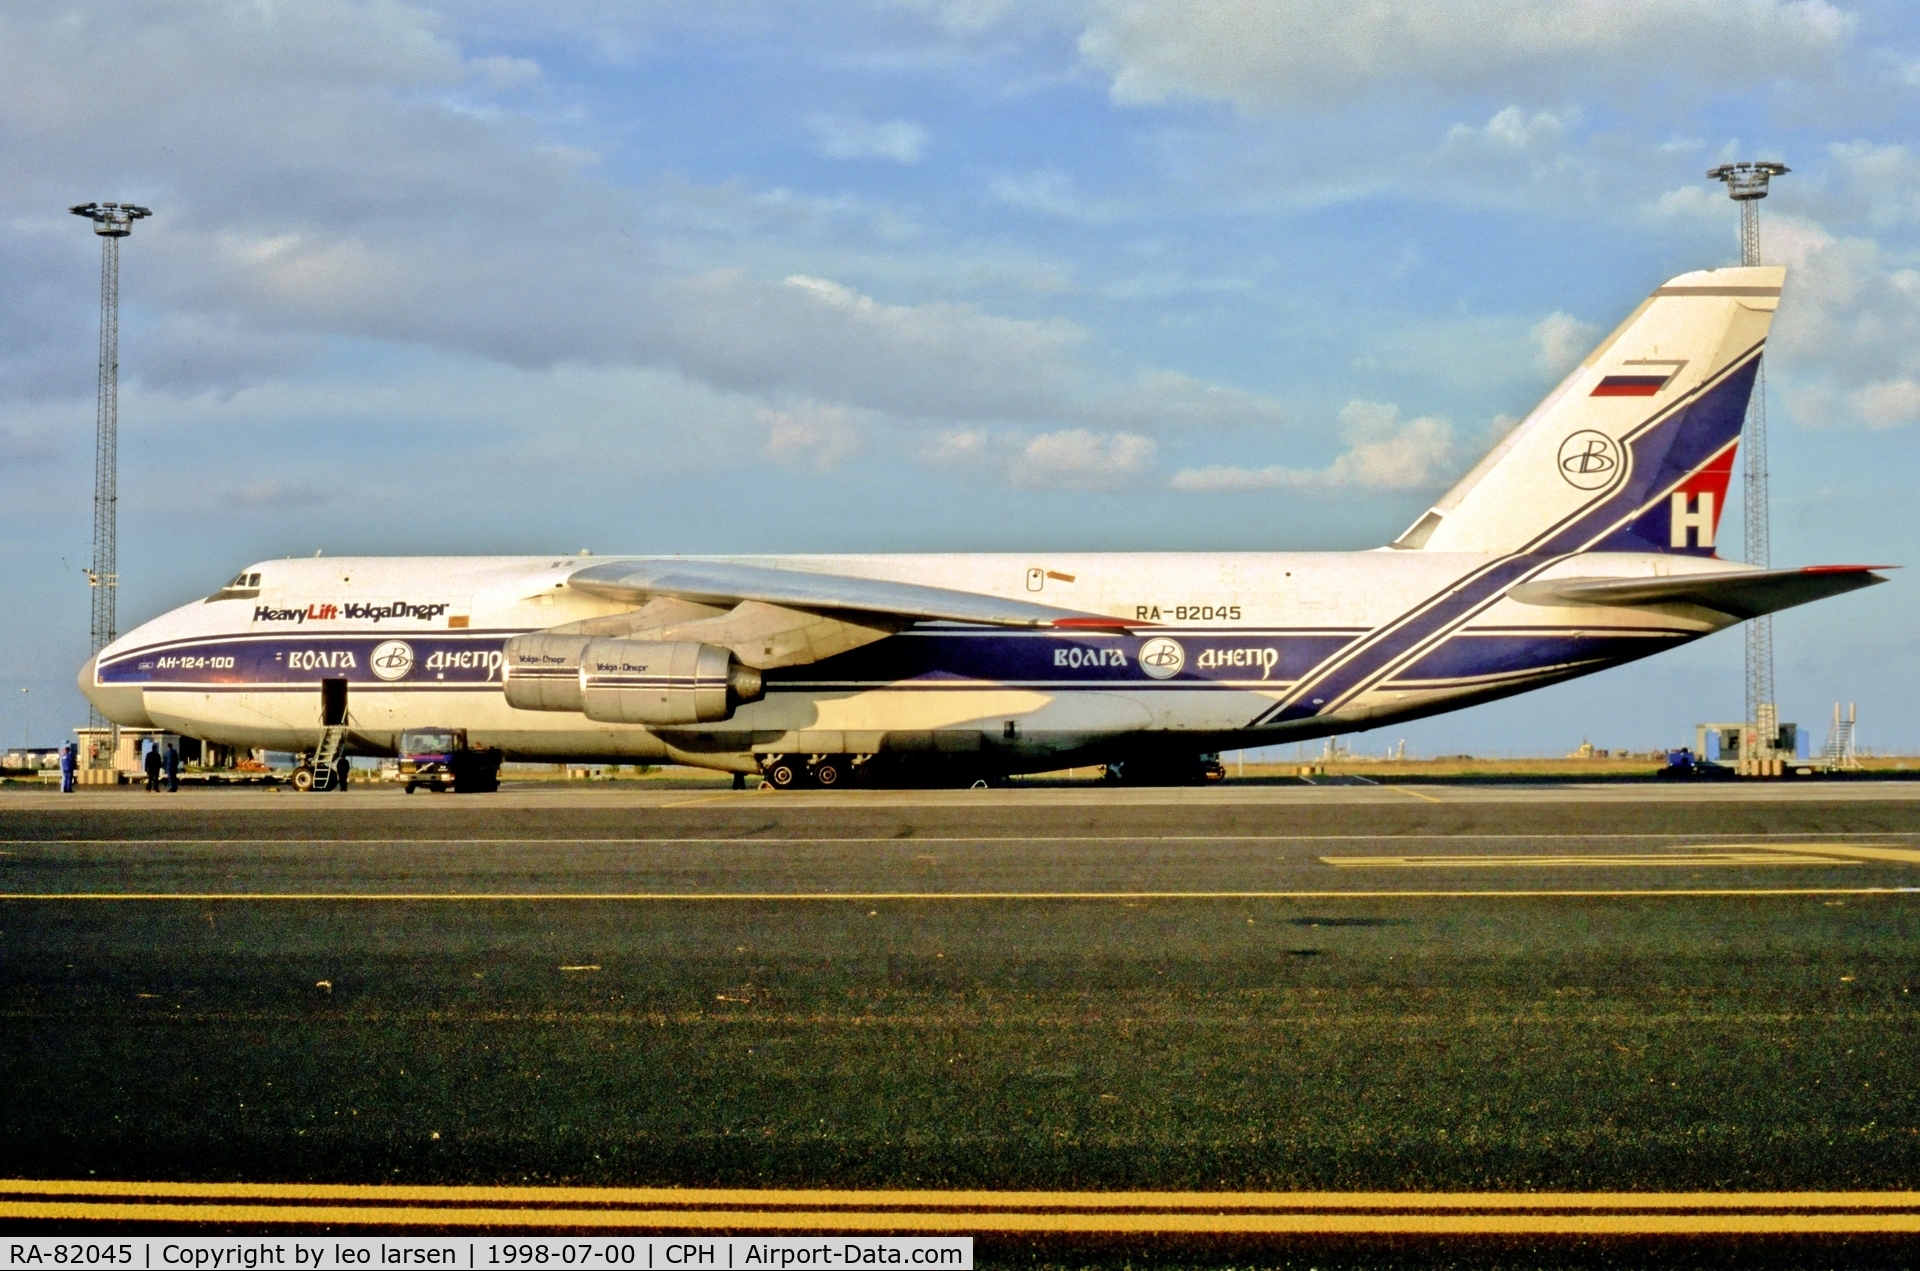 RA-82045, 1991 Antonov An-124-100 Ruslan C/N 9773052255113, Copenhagen 7.1998